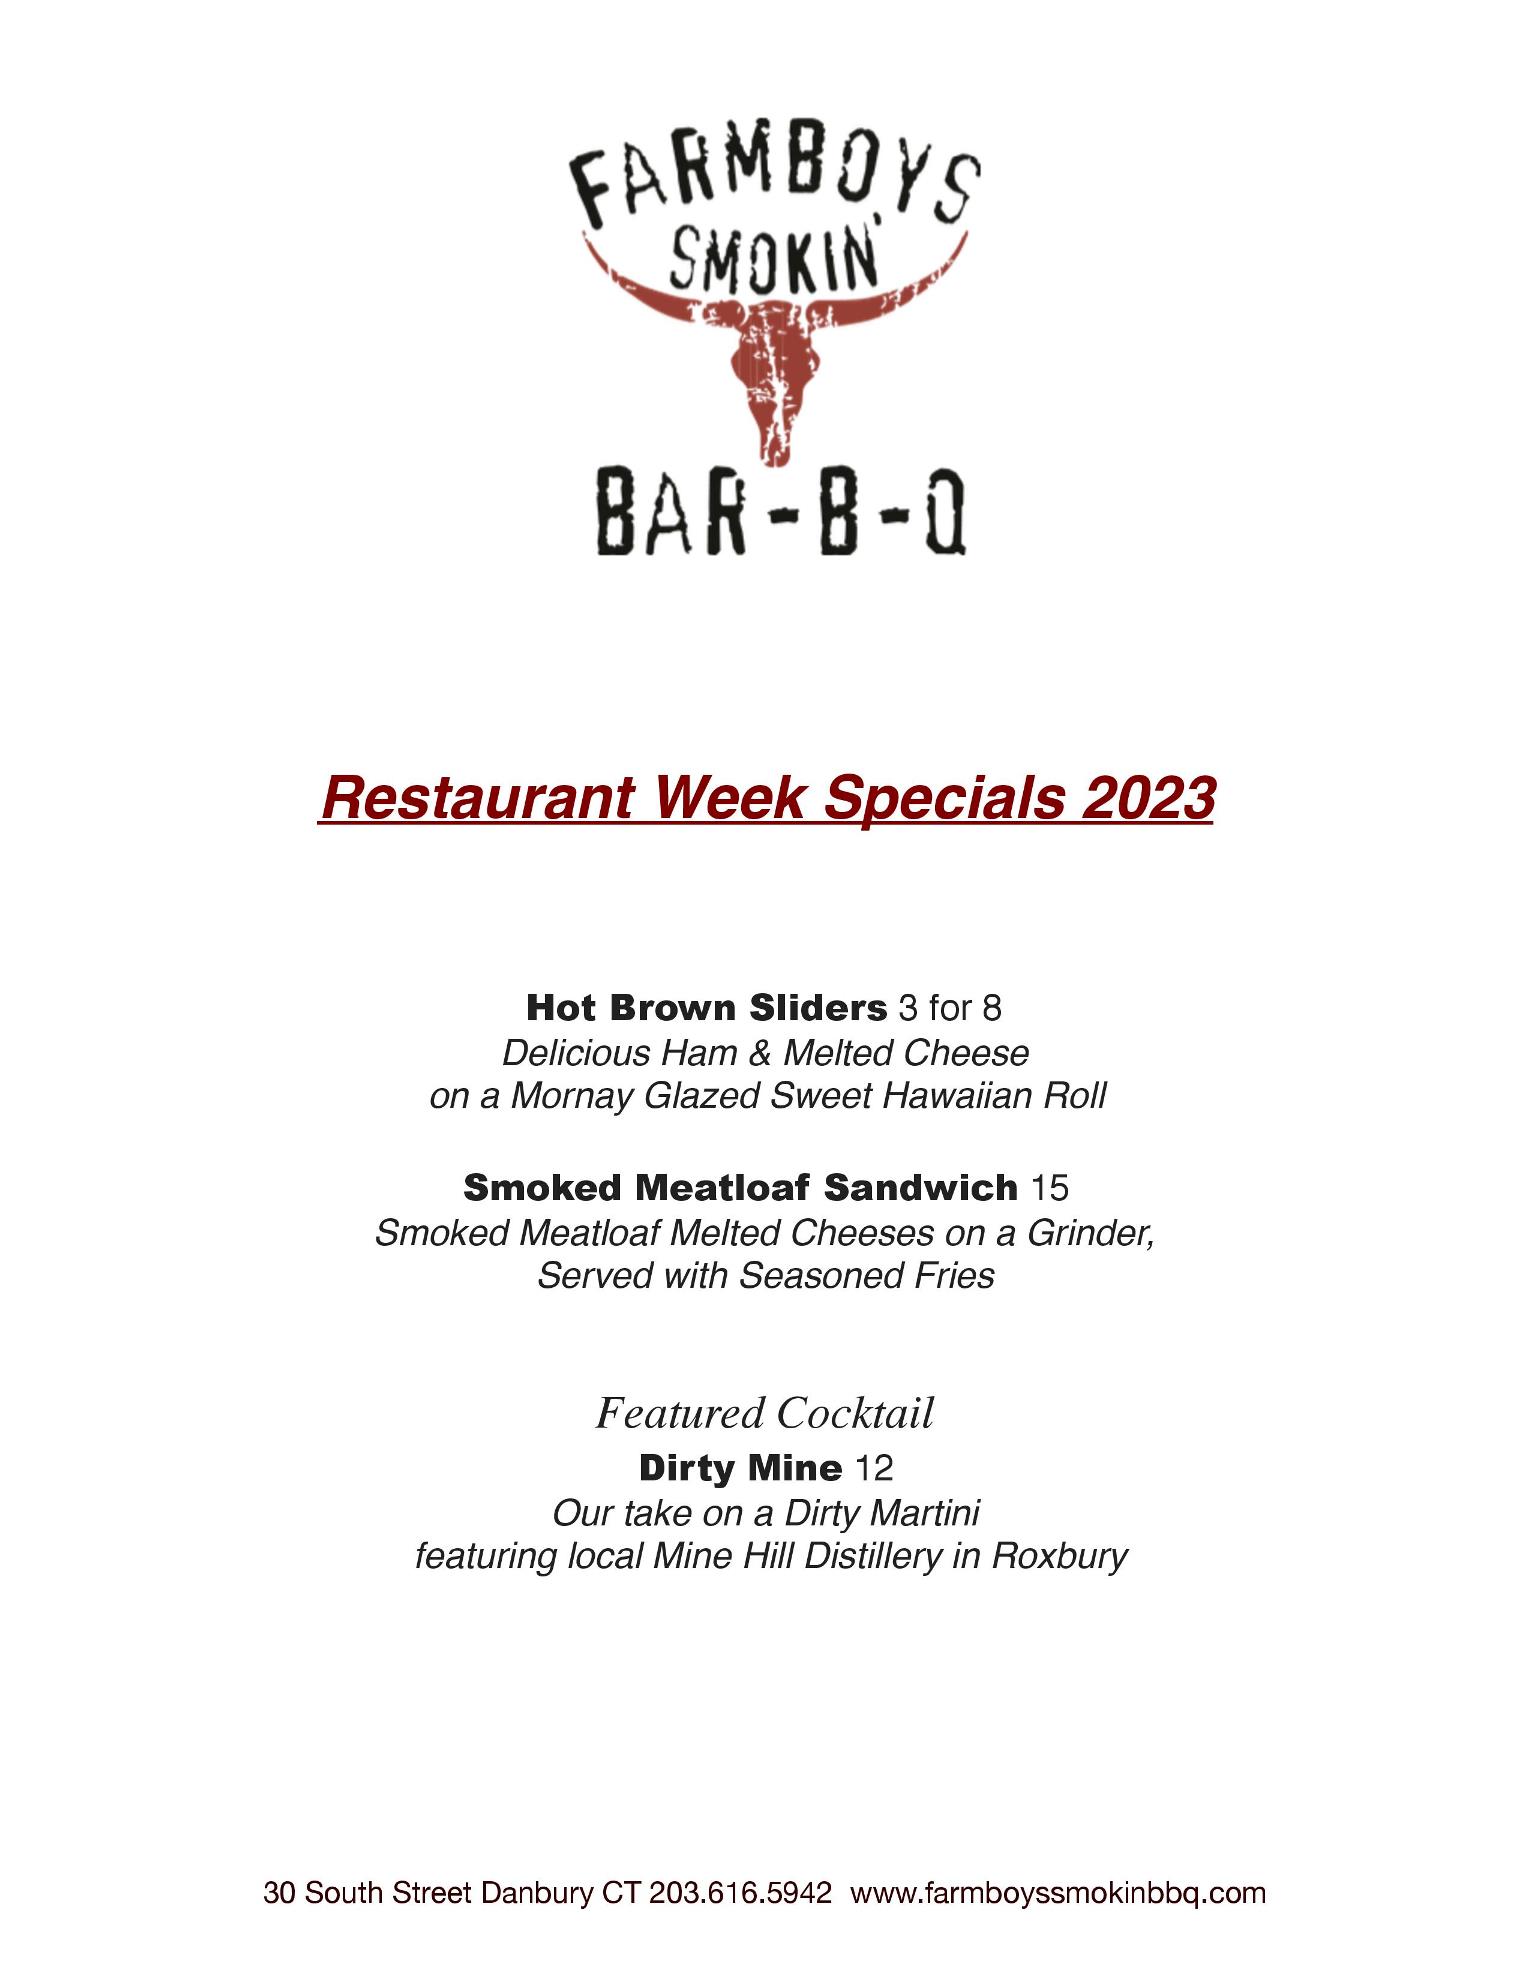 Farmboys Smokin’ BBQ Danbury Restaurant Week Connecticut Restaurant